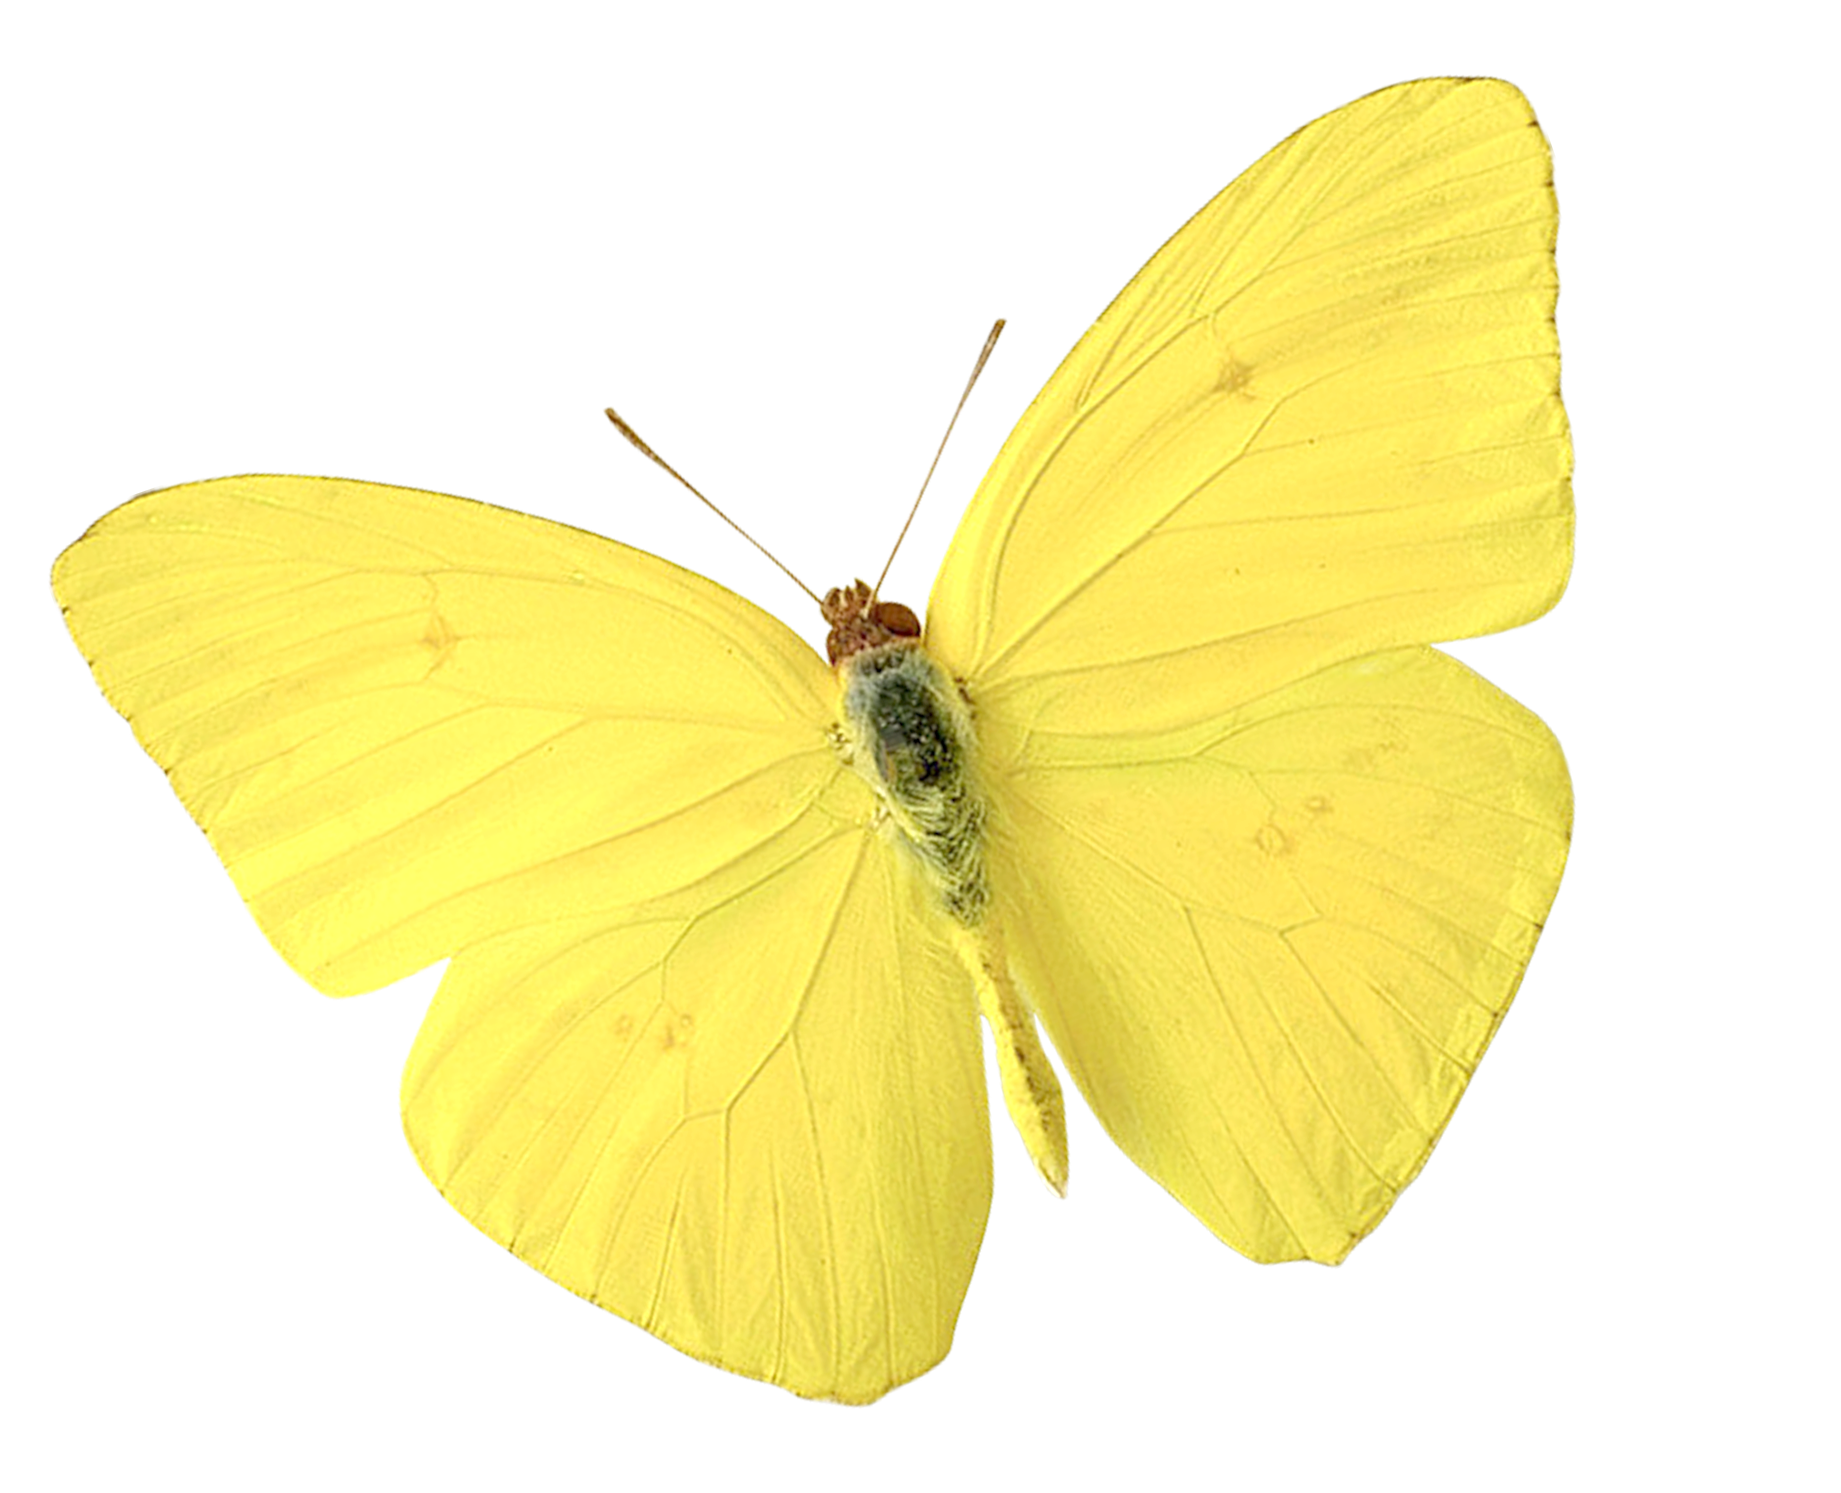 Бабочка капустница и лимонница. Бабочка капустница желтая. Бабочка копустница жёлтая. Жёлтая бабочка лимонница. Бабочка лимонница рисунок